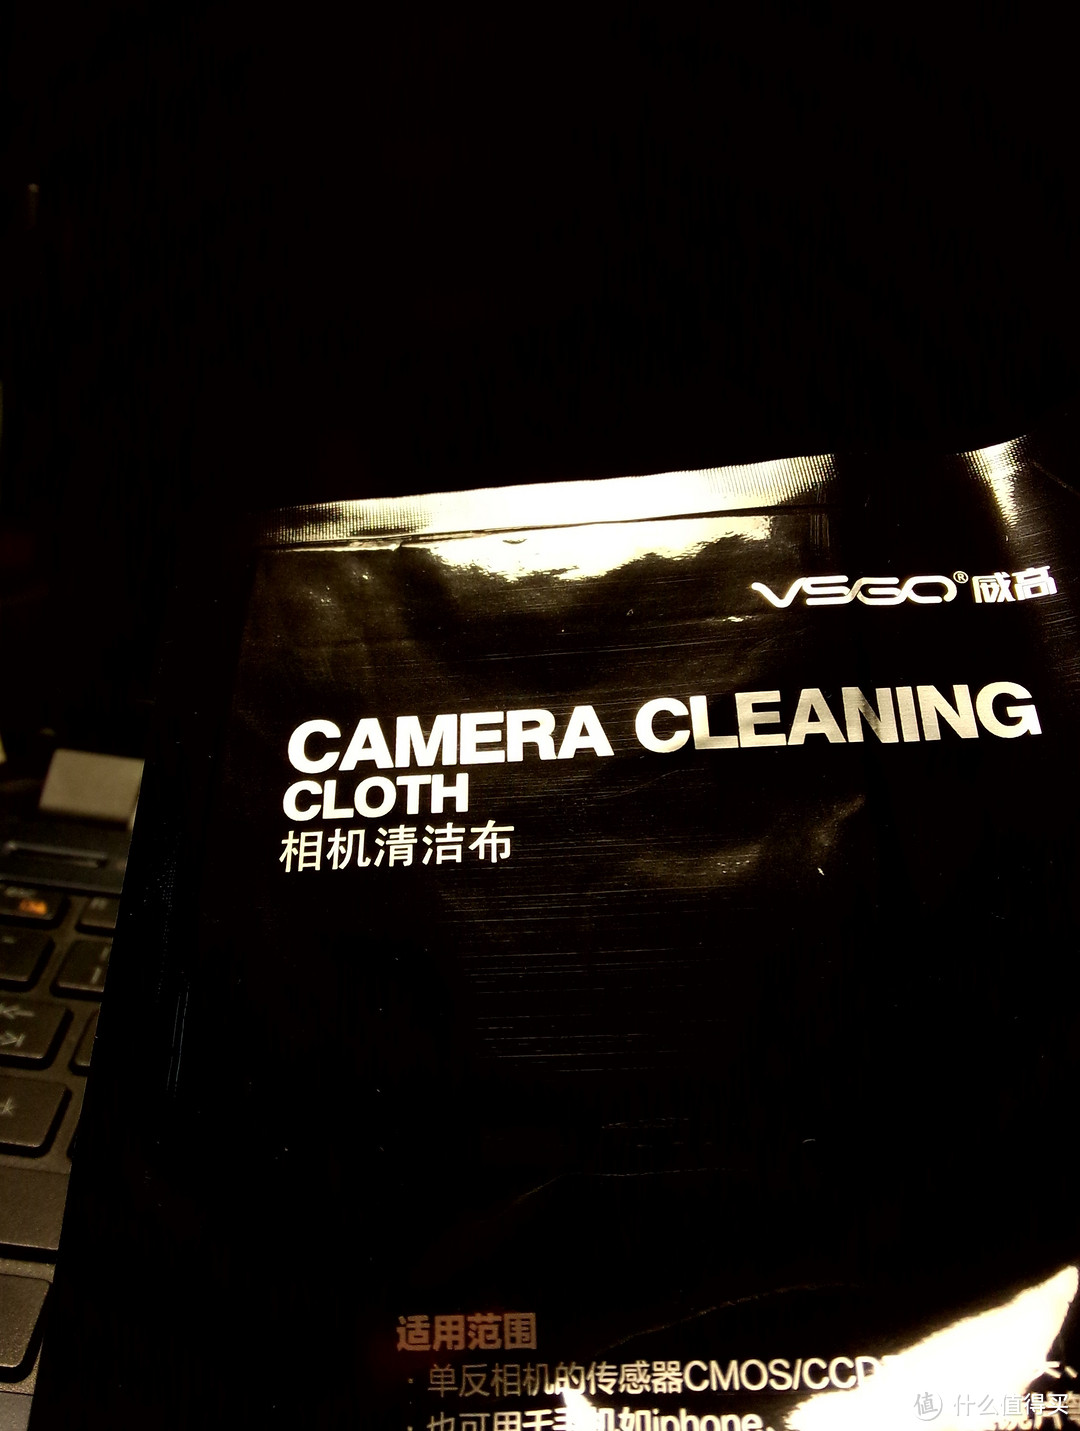 VSGO 威高 D-10150 单反相机便携清洁布 评测